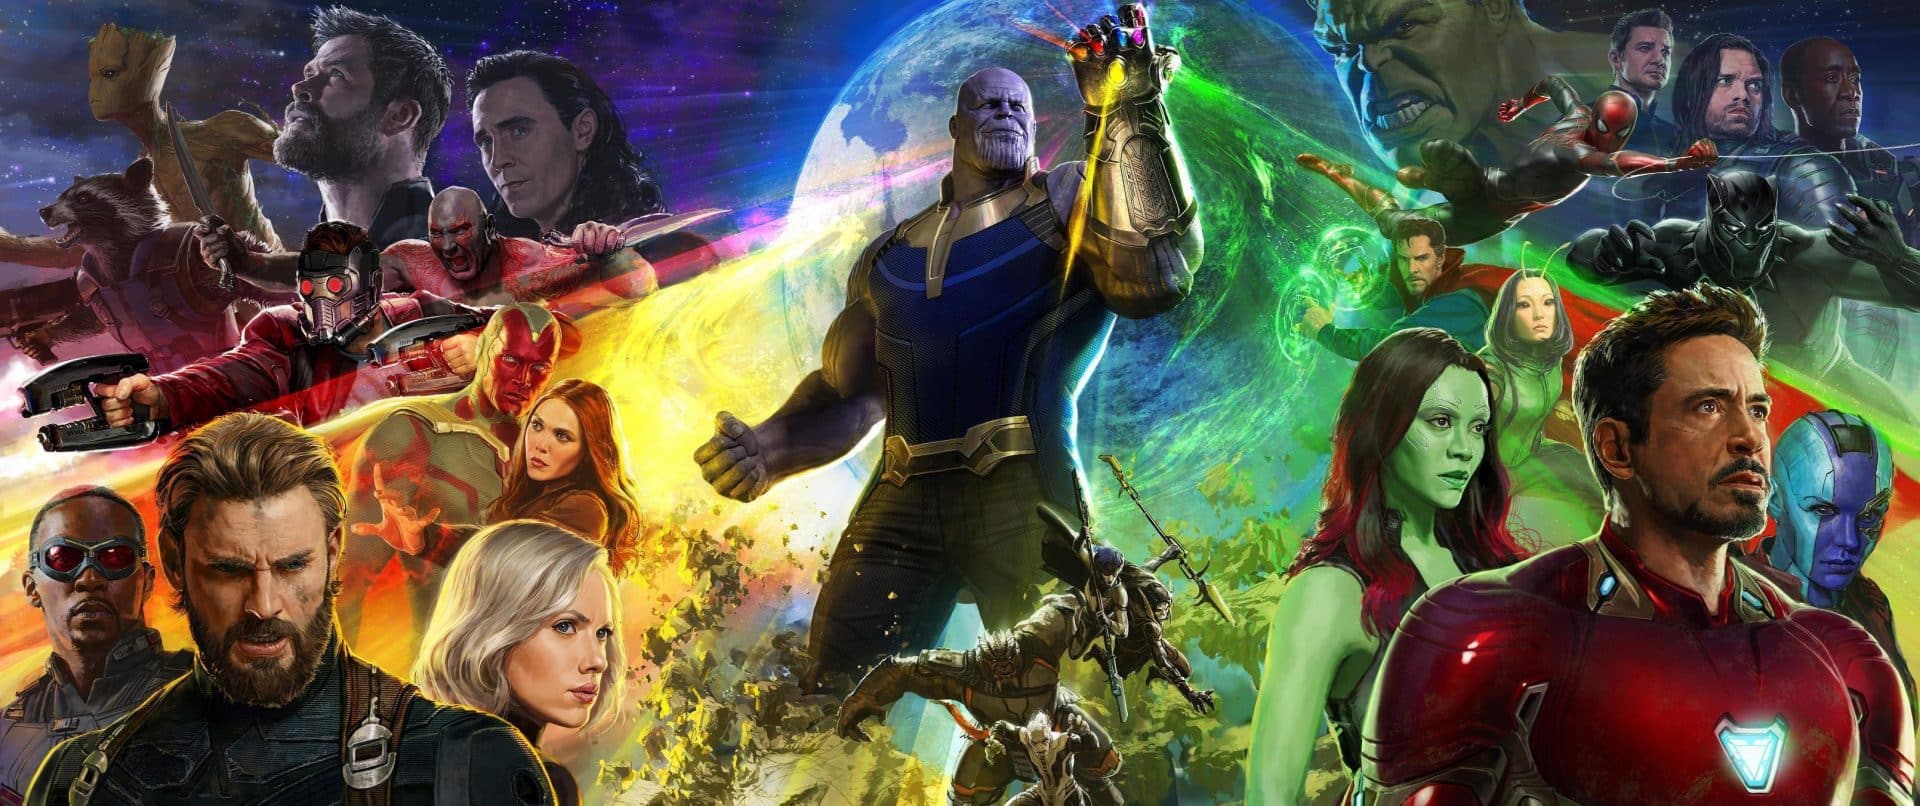 Avengers: Infinity War – i creativi poster fan-made sono fenomenali